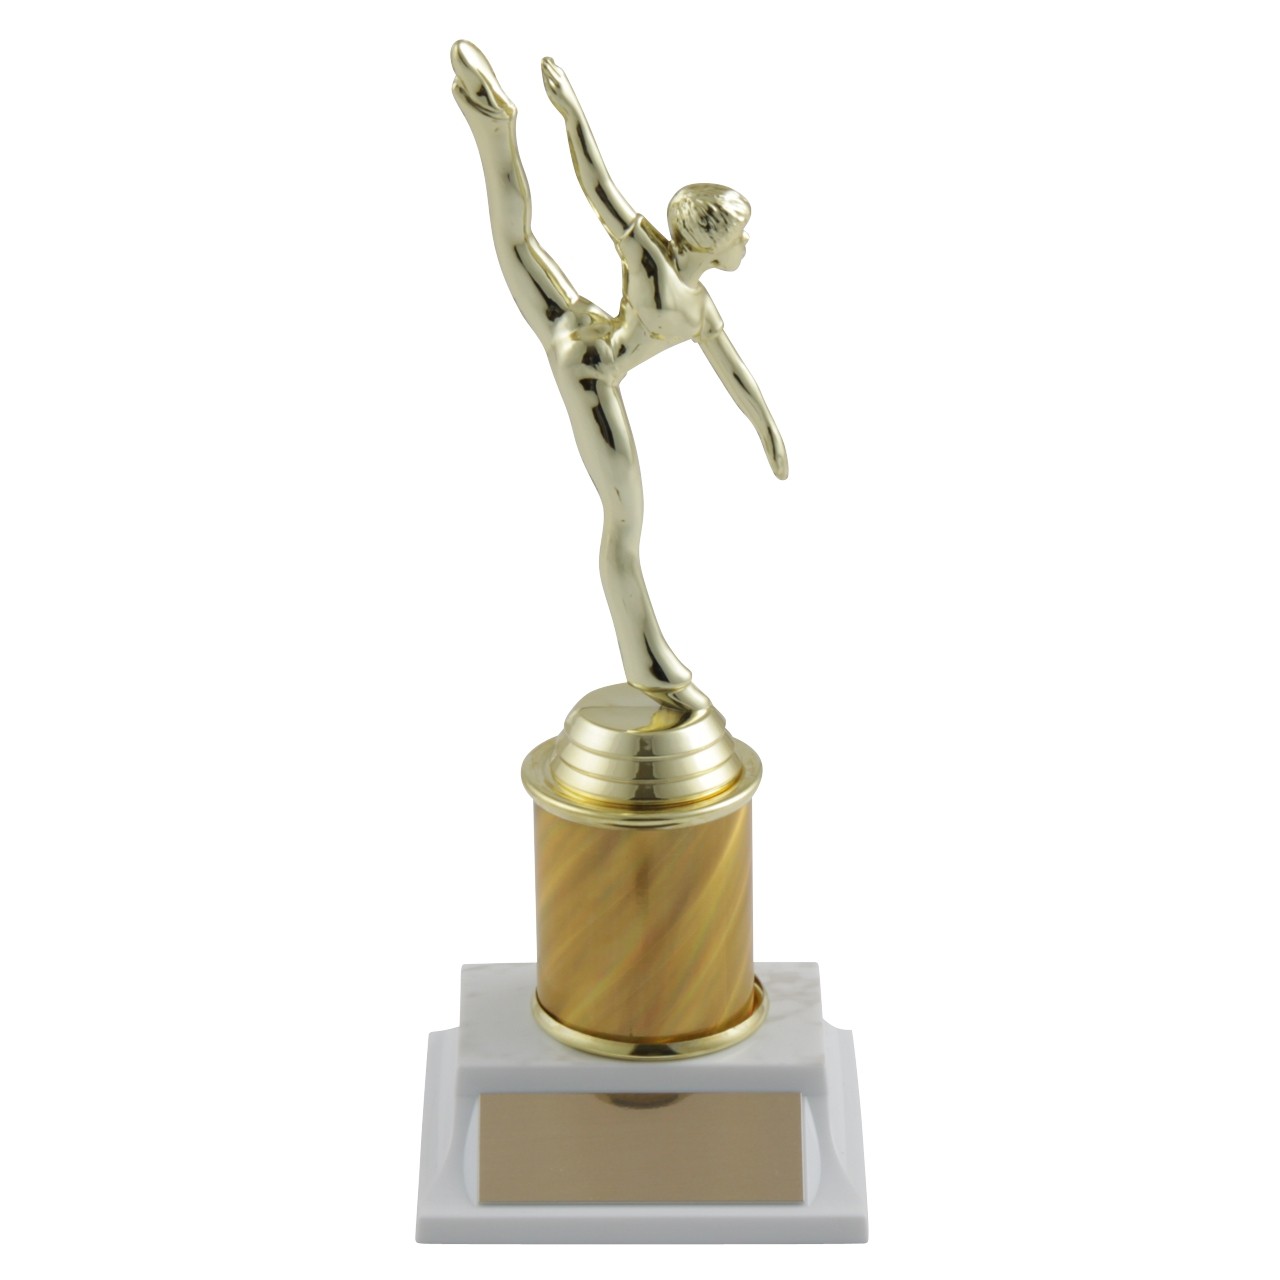 TRIALS BIKE mega star trophy free engraving gold silver bronze trophies 